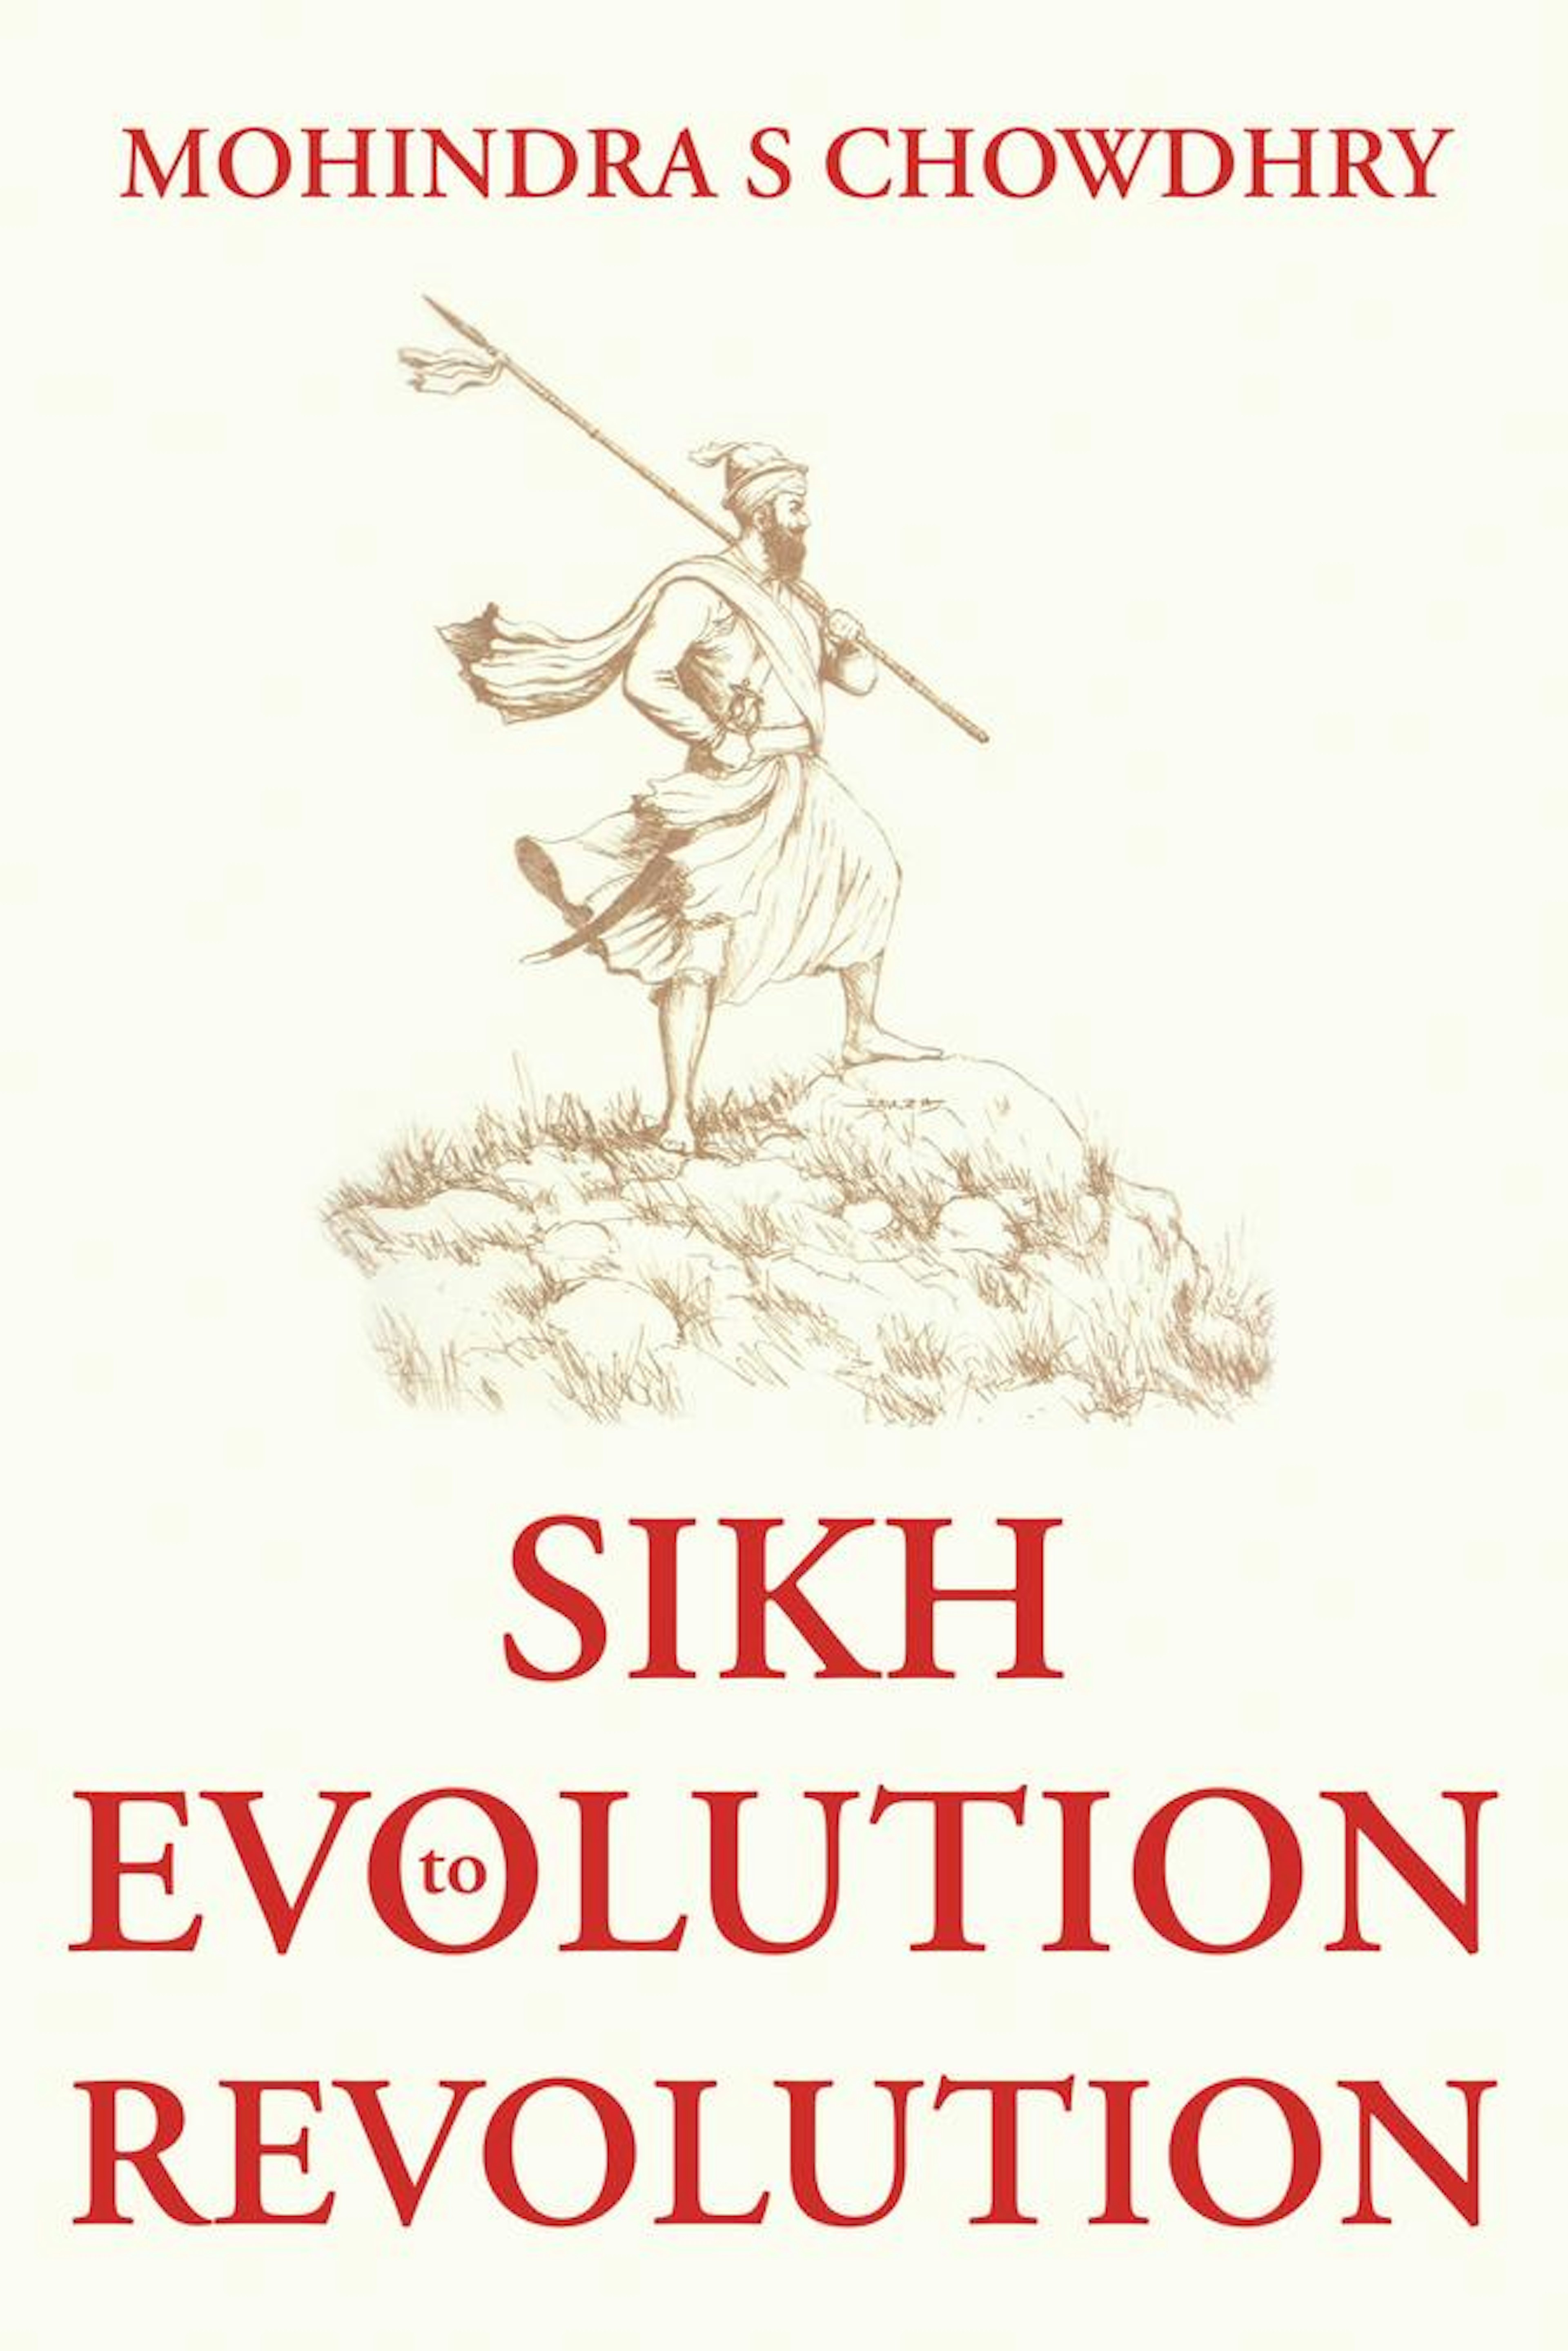 Sikh Evolution to Revolution